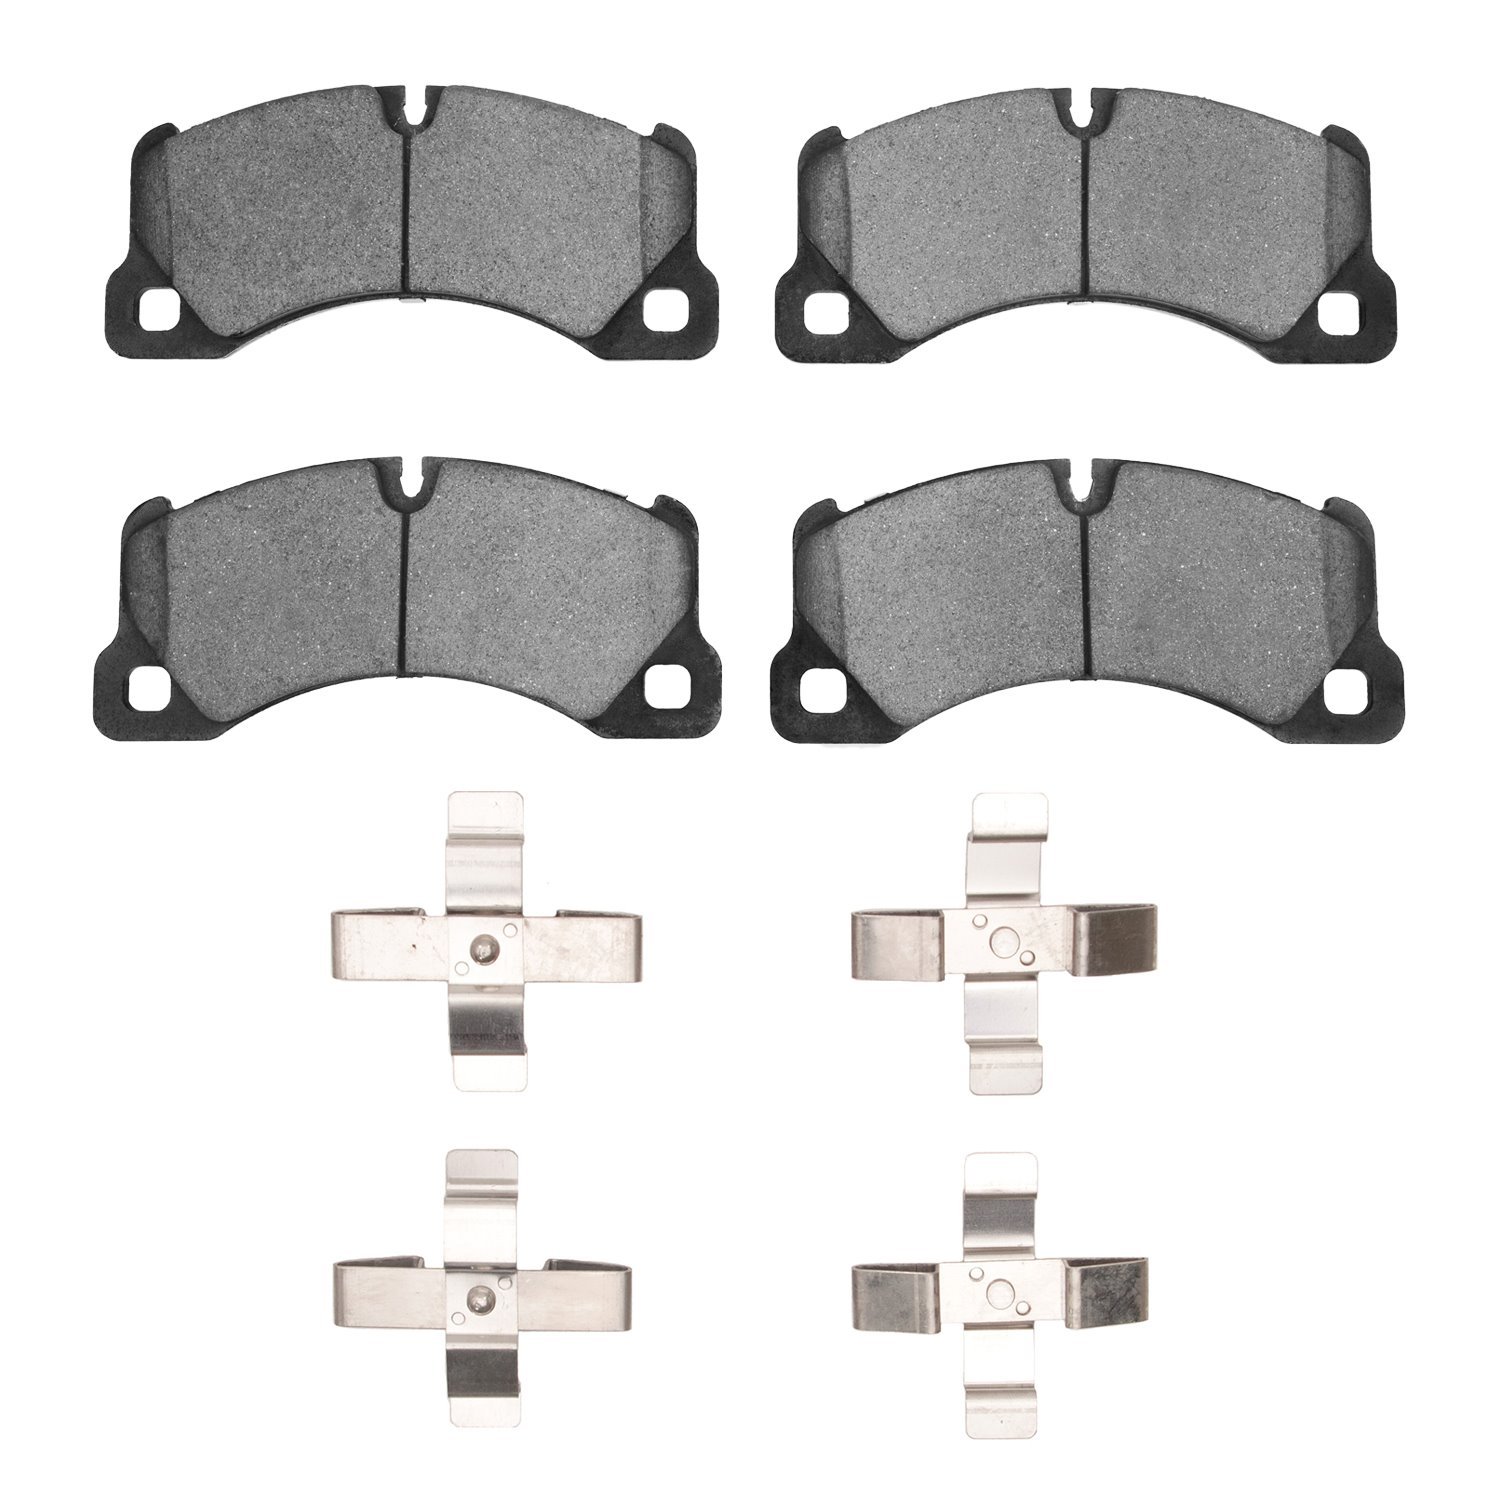 1310-1349-01 3000-Series Ceramic Brake Pads & Hardware Kit, 2008-2021 Multiple Makes/Models, Position: Front